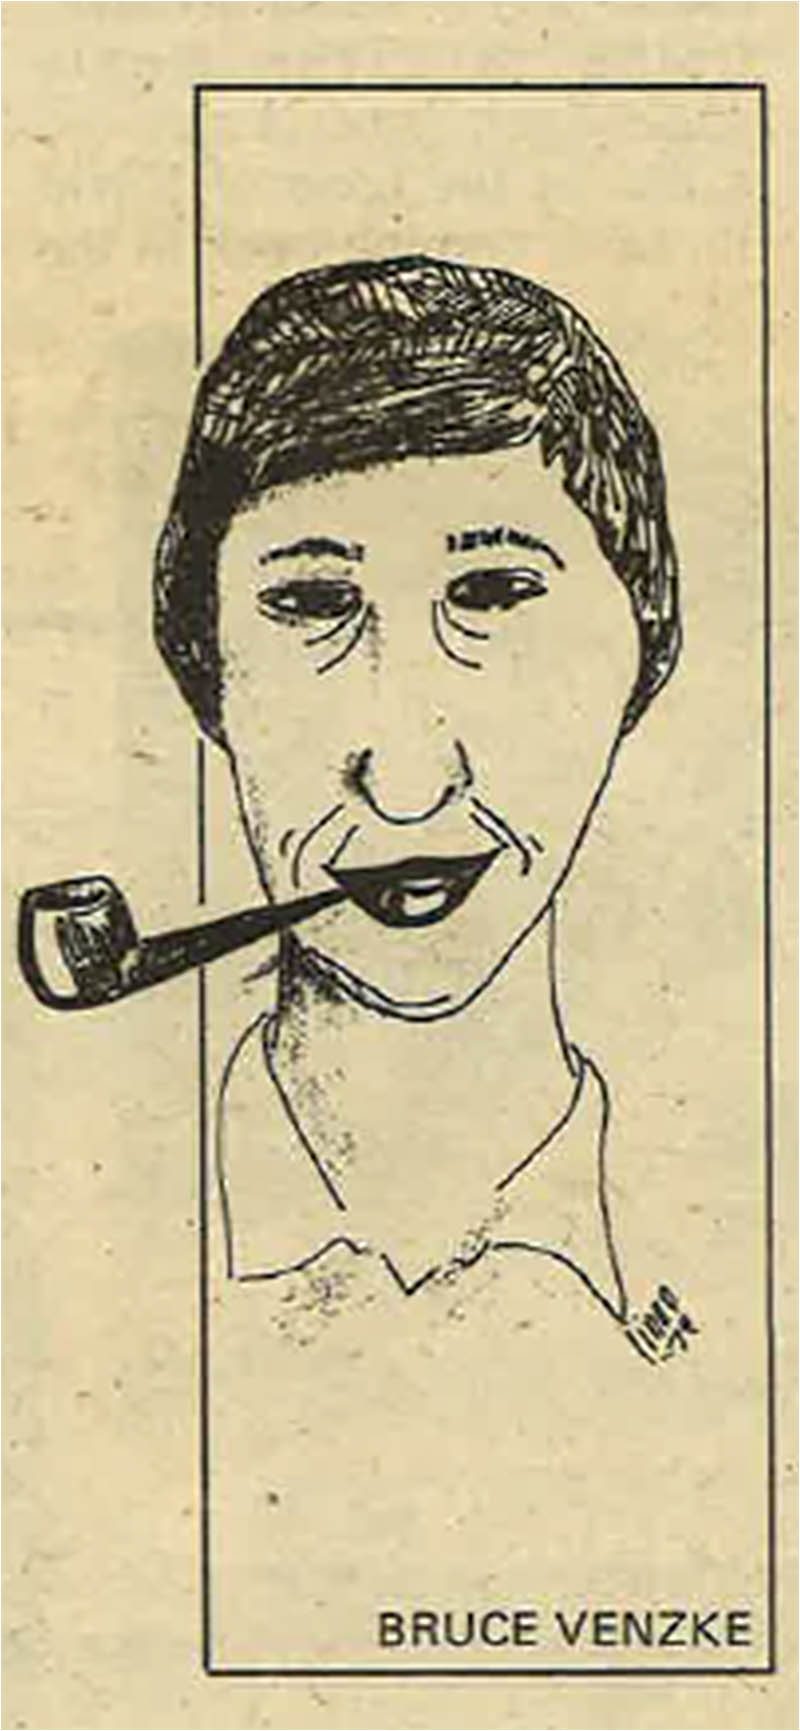 Bruce Venzke column portrait in 1979 for The National Billiard News publication